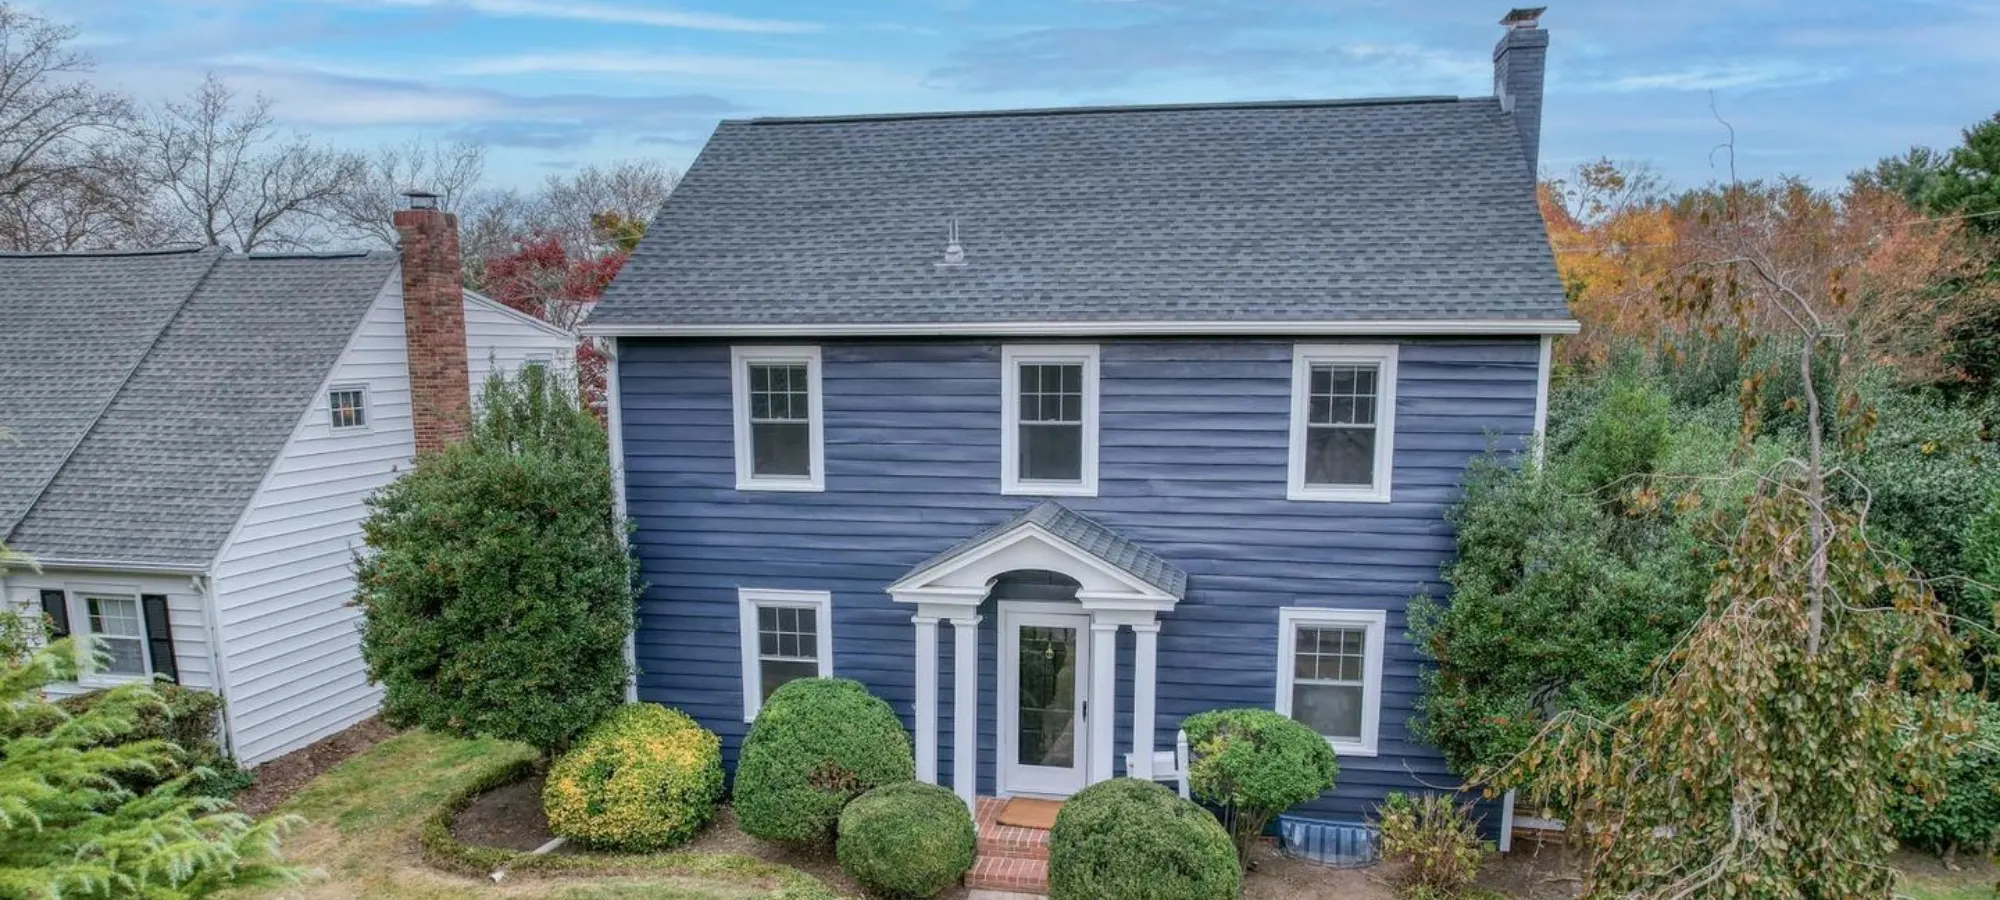 240_getmedia Delaware Real Estate | Find Your Dream Home with Burns & Ellis